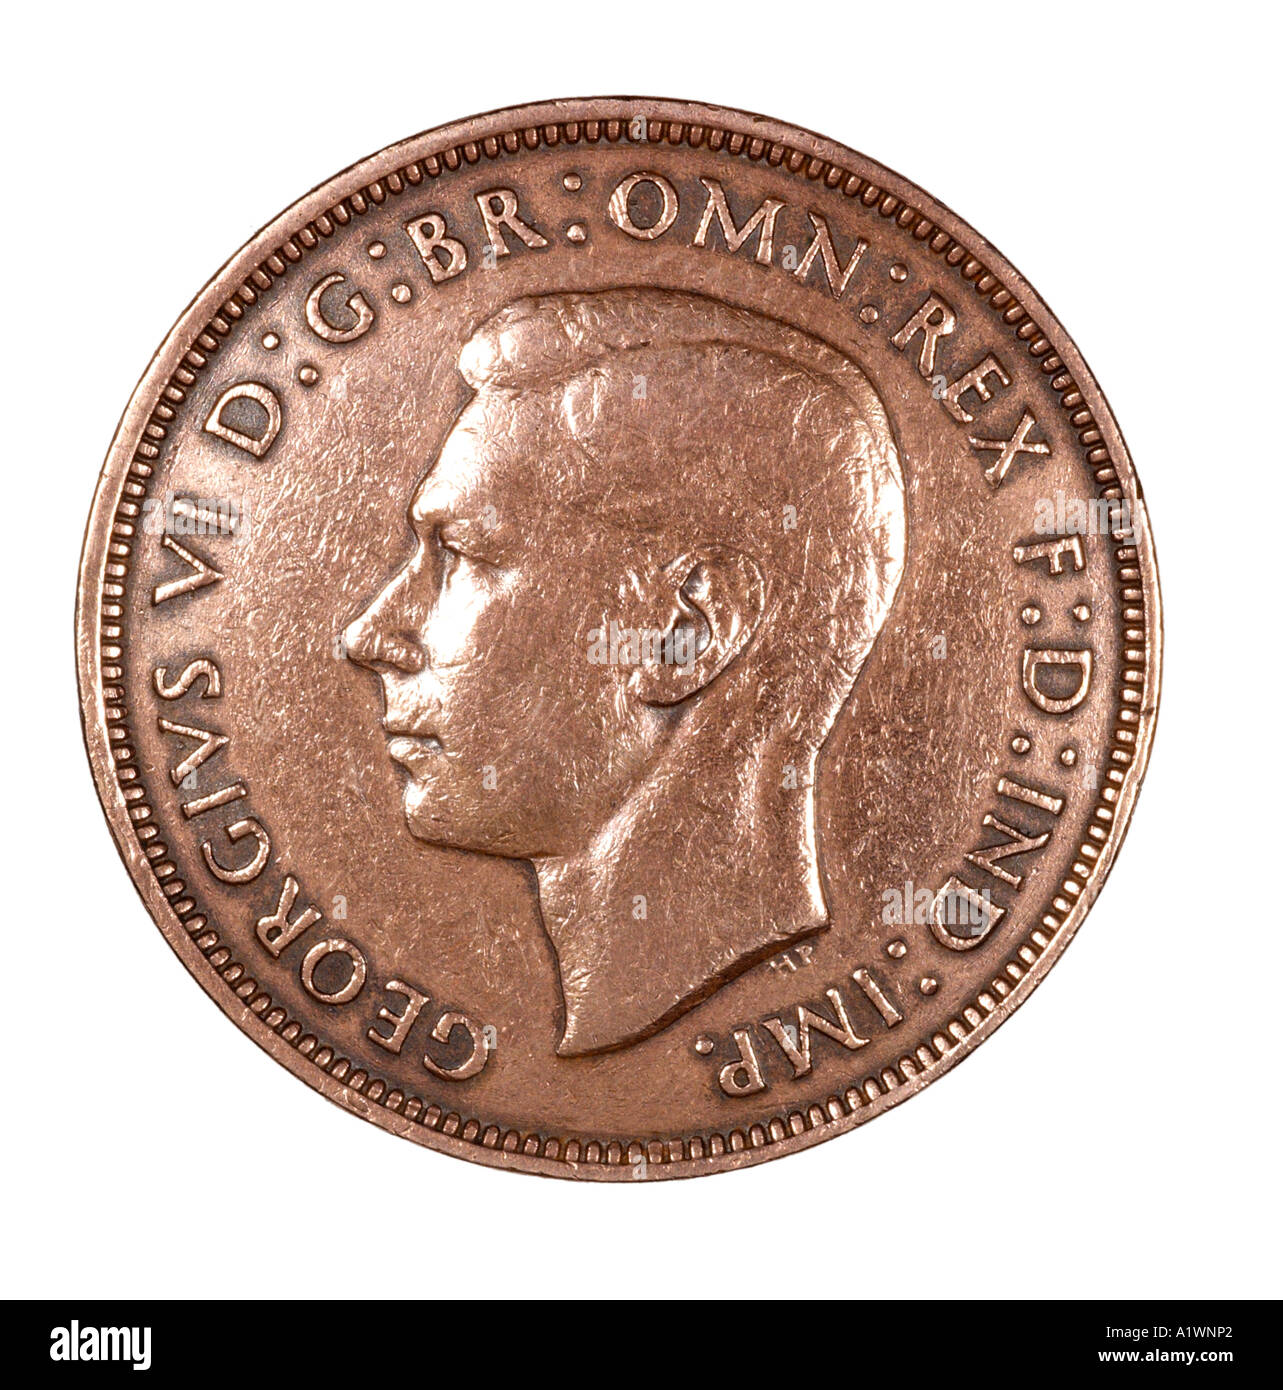 König George VI Reg Fid Def Pre dezimal 1 einen Penny alten Pence P 1945 Kupfer hellen Kopf nach links Omn Rex dei Stockfoto